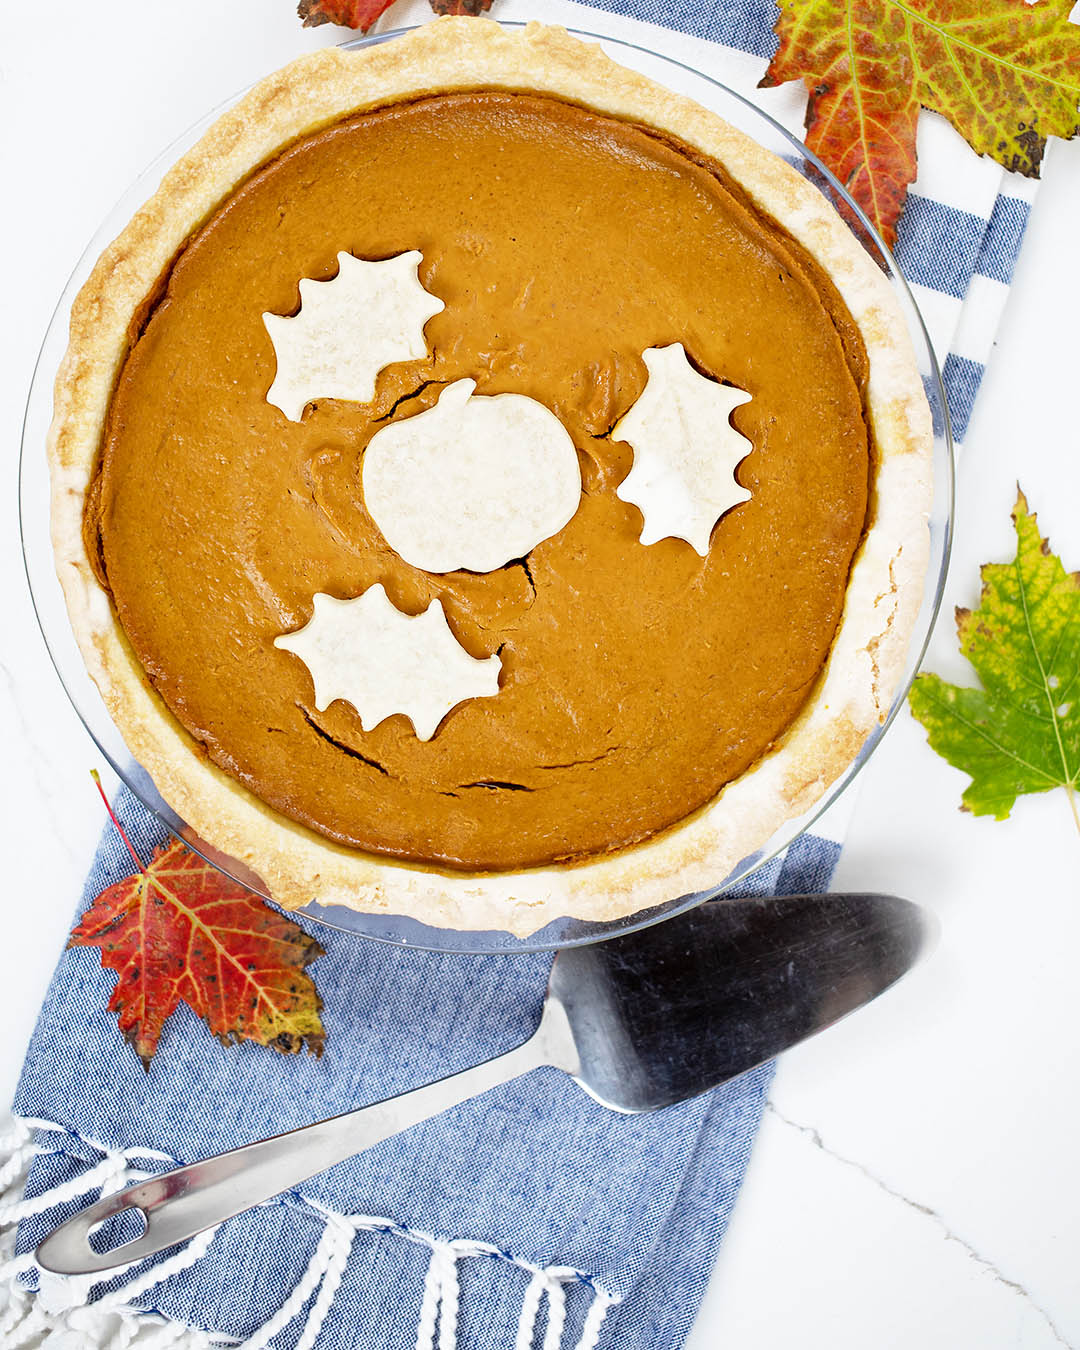 Thanksgiving desserts like pumpkin pie are the best part!